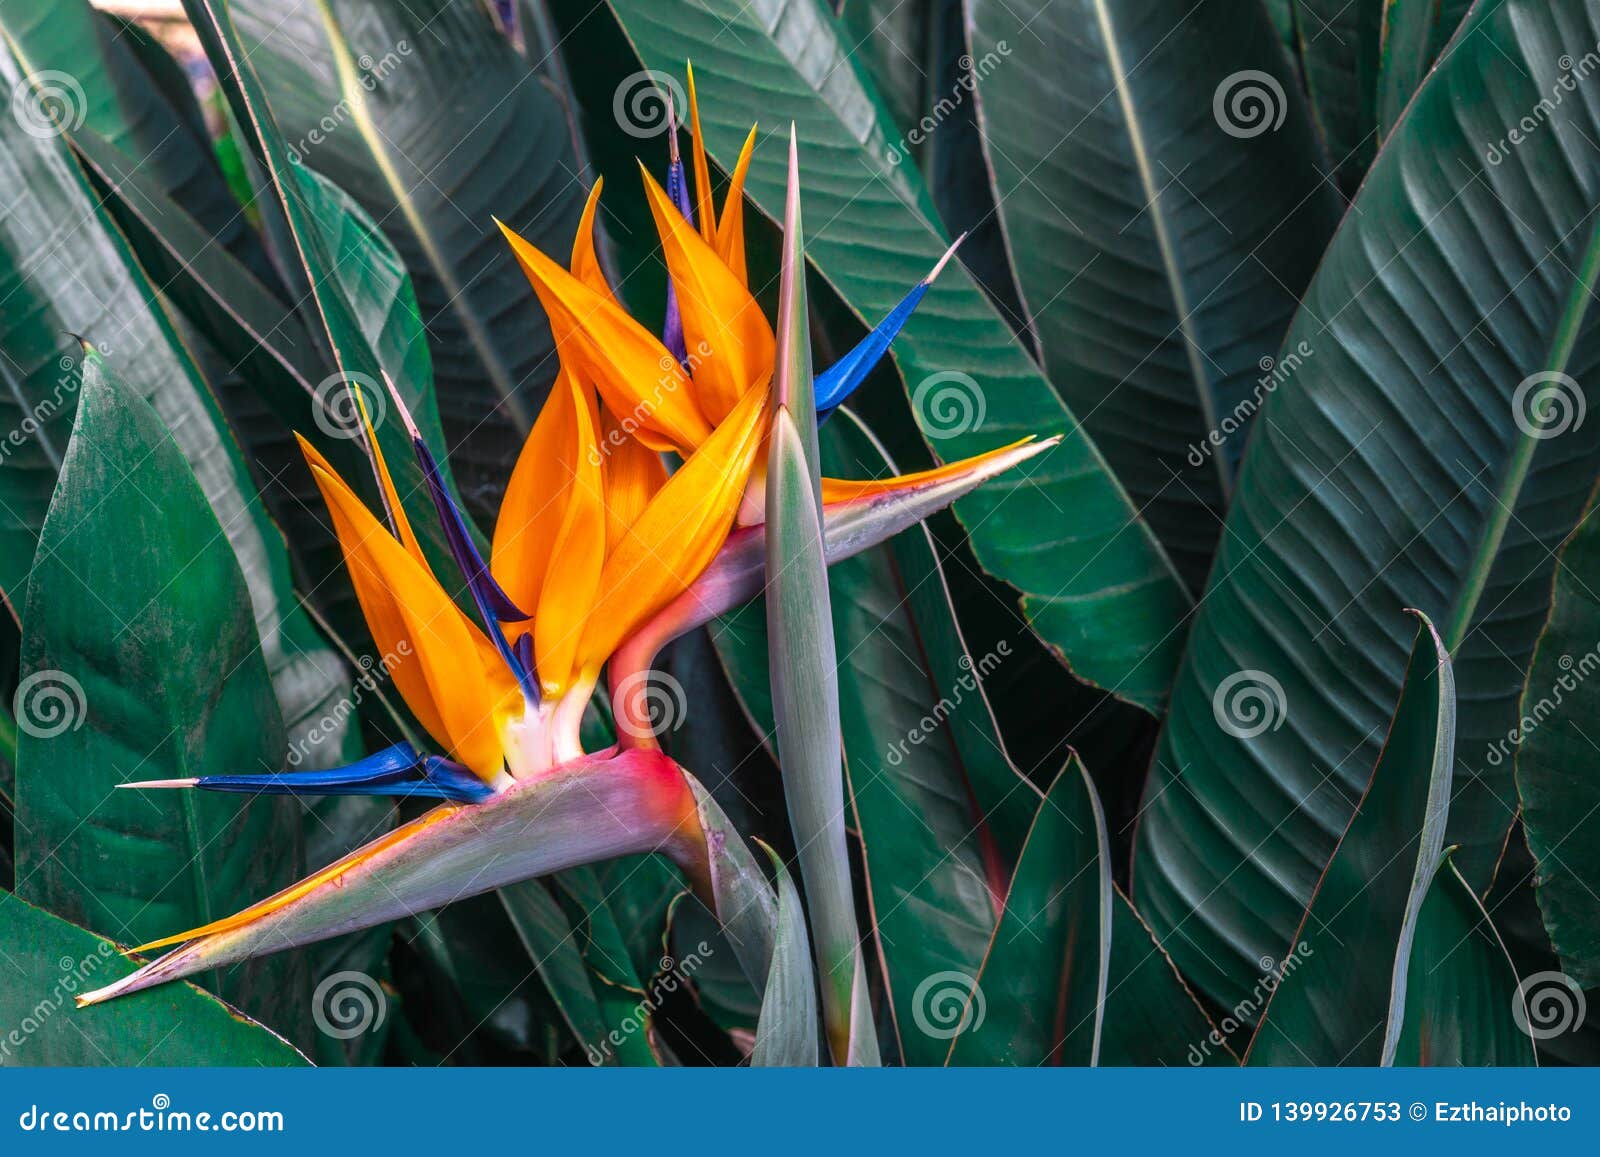 beautiful bird of paradise flower & x28;strelitzia reginae& x29; with green leaves background in tropical garden